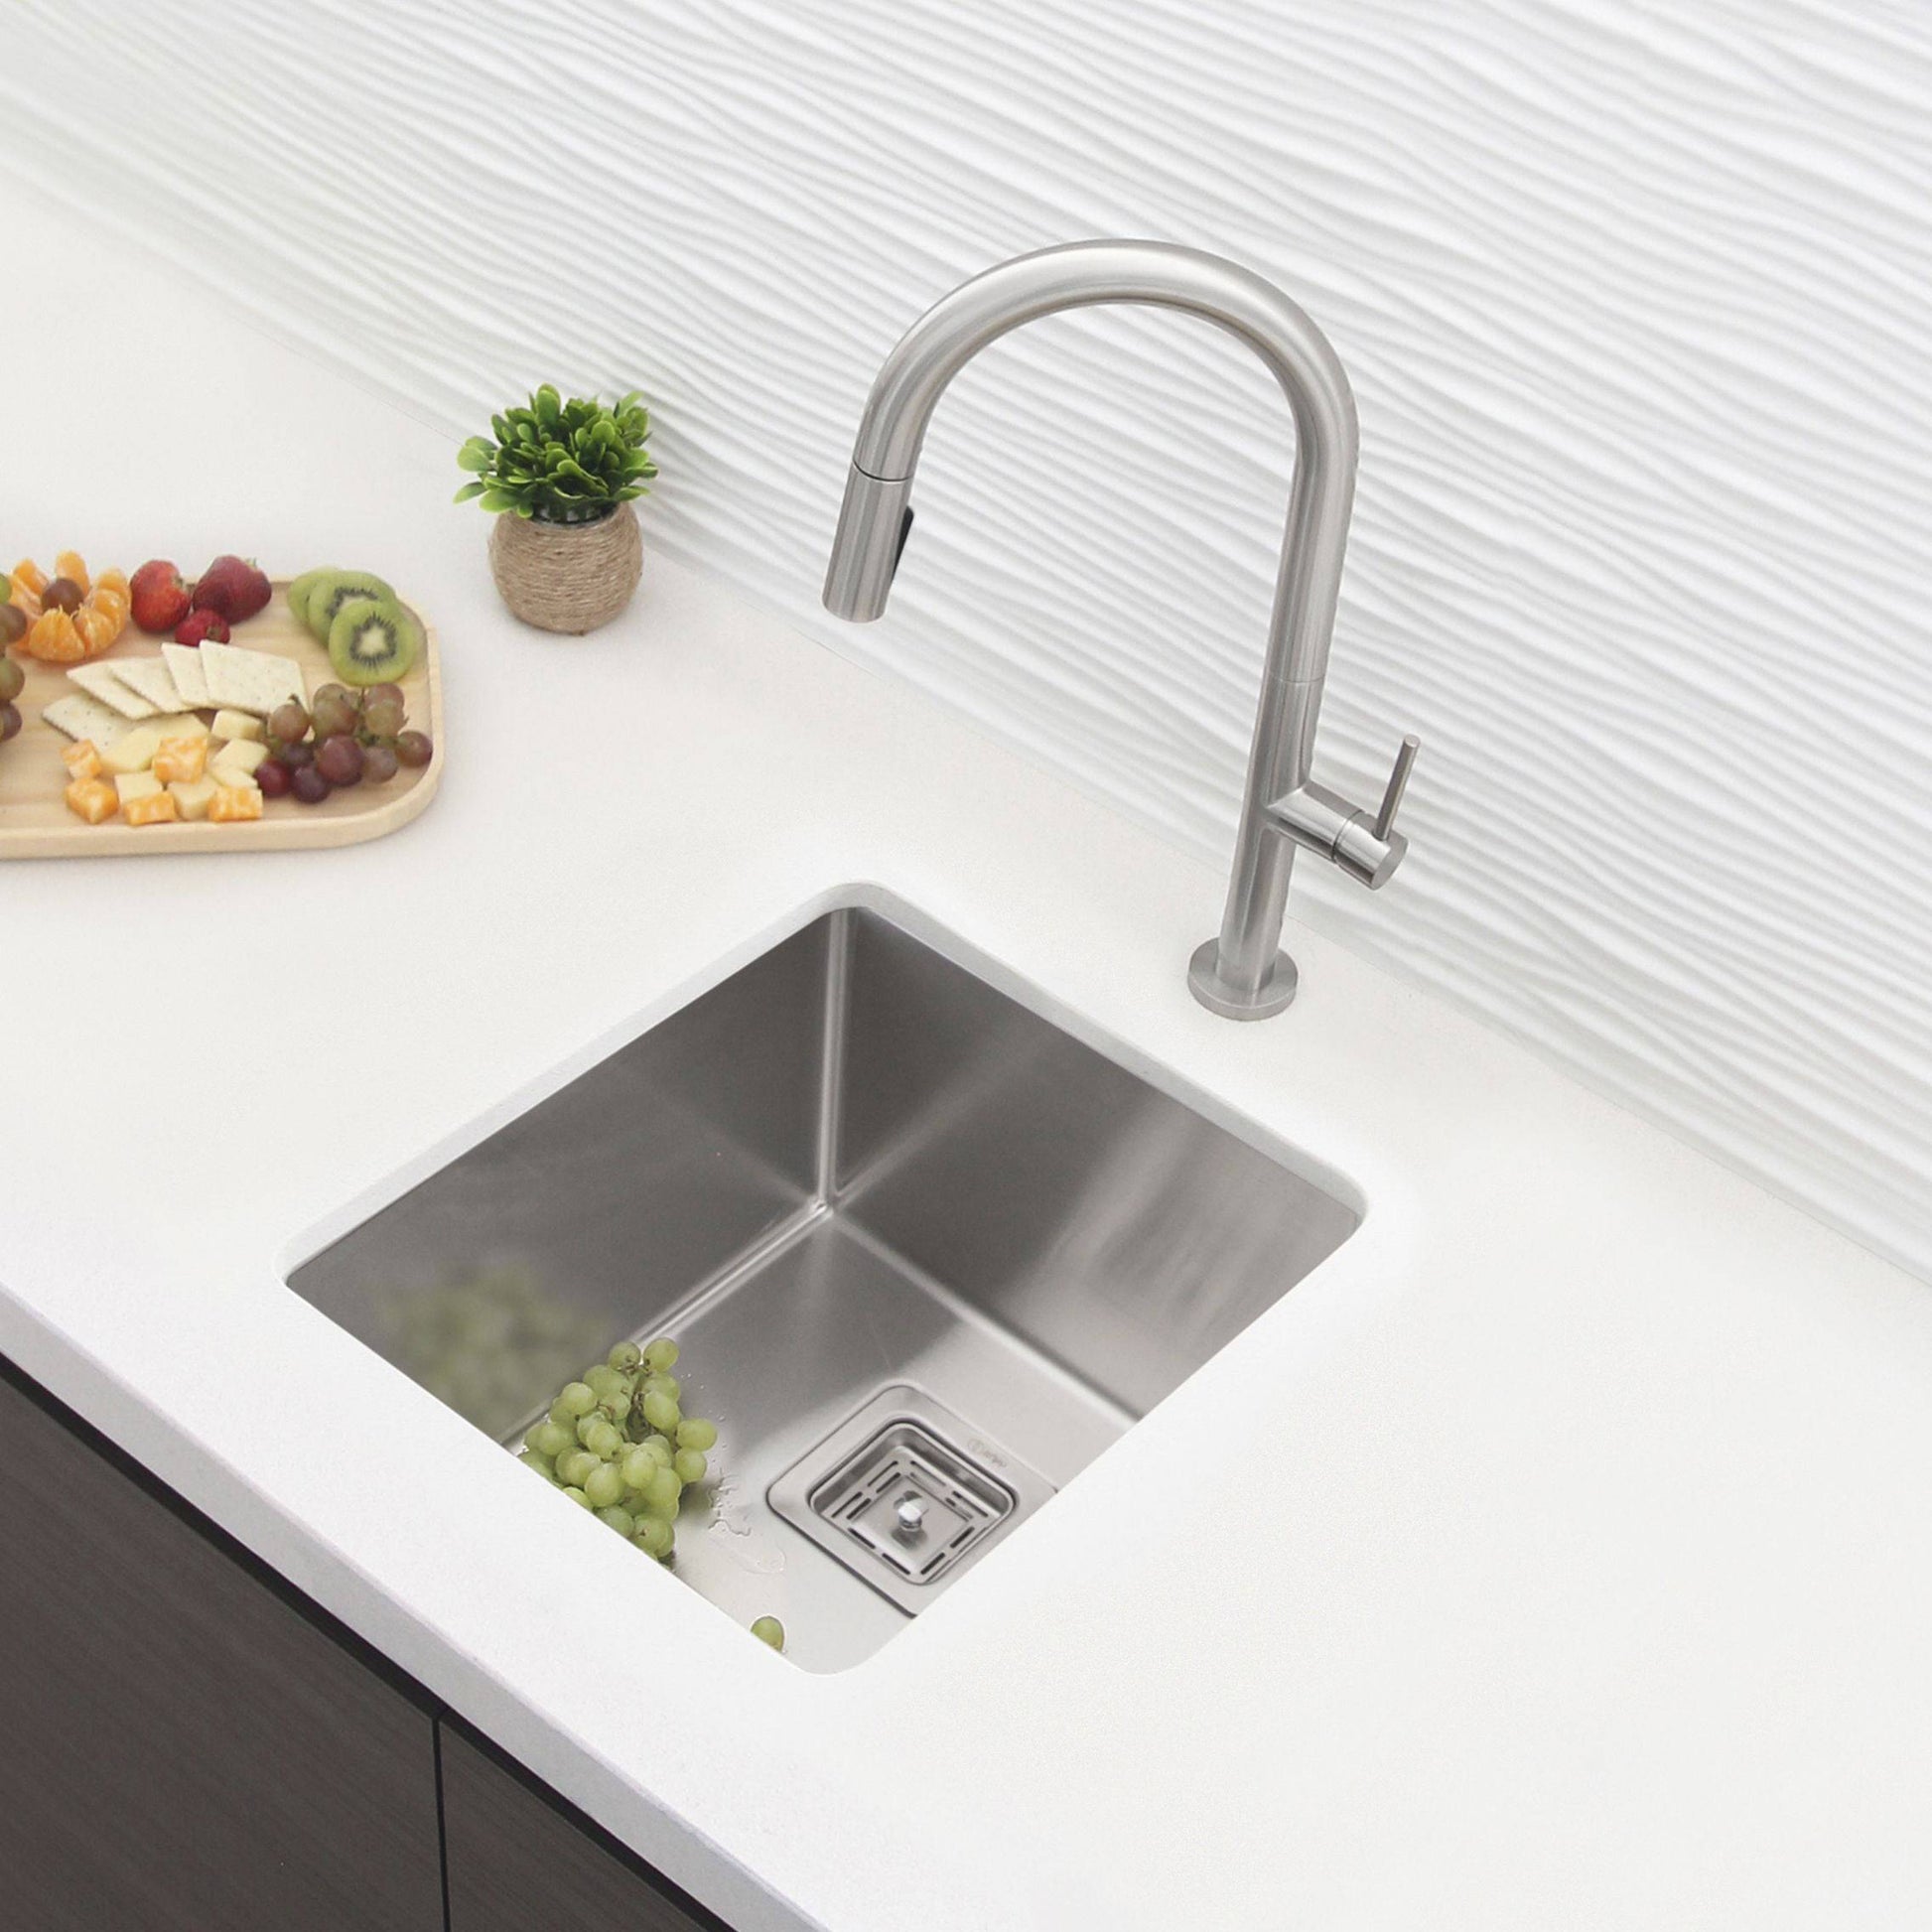 Stylish Kubo 16" x 18" Single Bowl Stainless Steel Kitchen Sink with Square Strainer S-509XG - Renoz